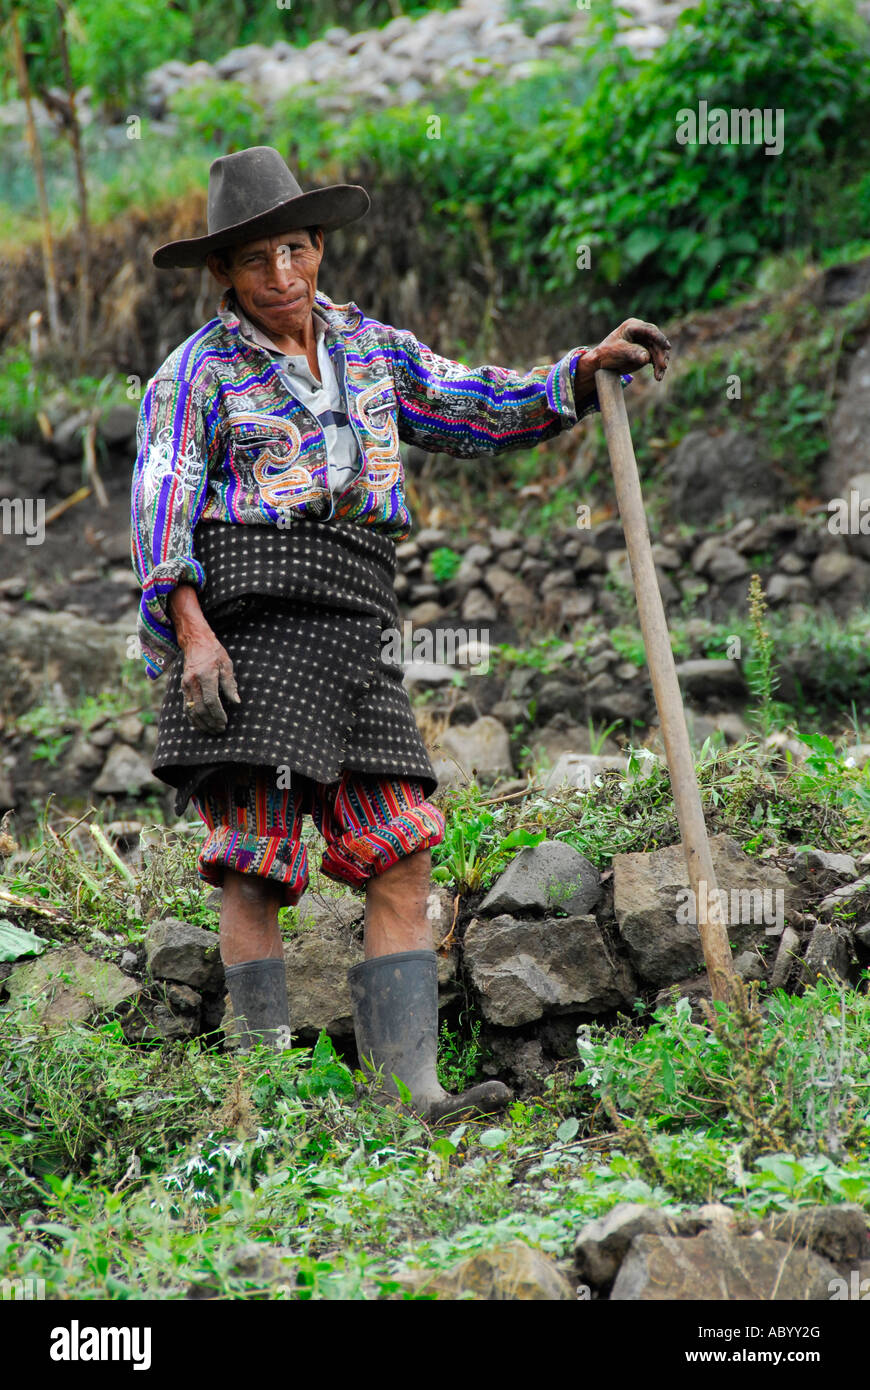 Image result for imagenes de ropa  indigena de guatemala